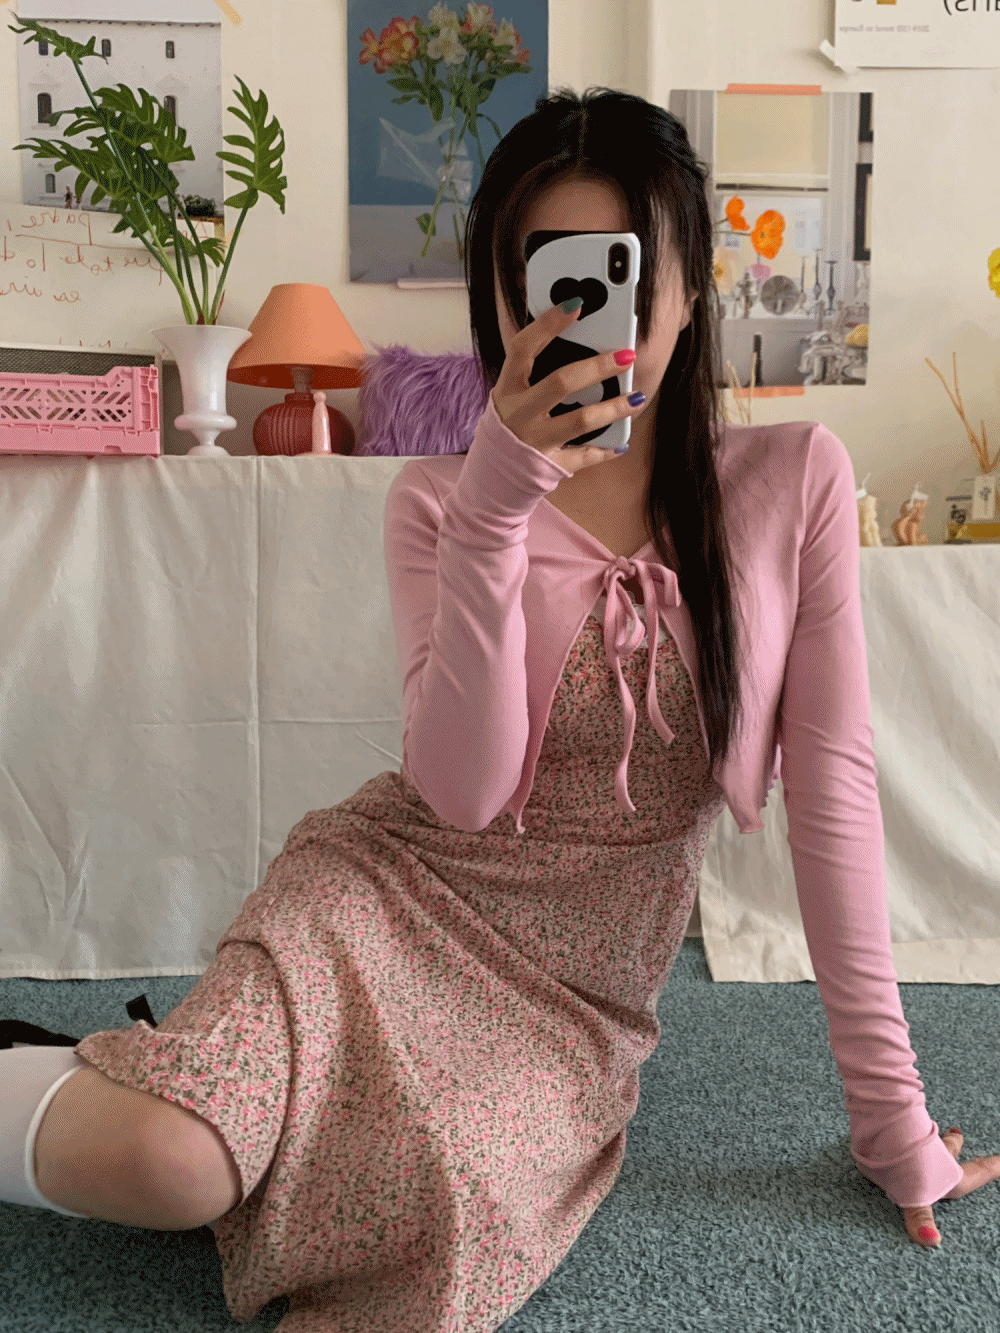 [Dress] Rosemary sienna sleeveless dress / 3 colors